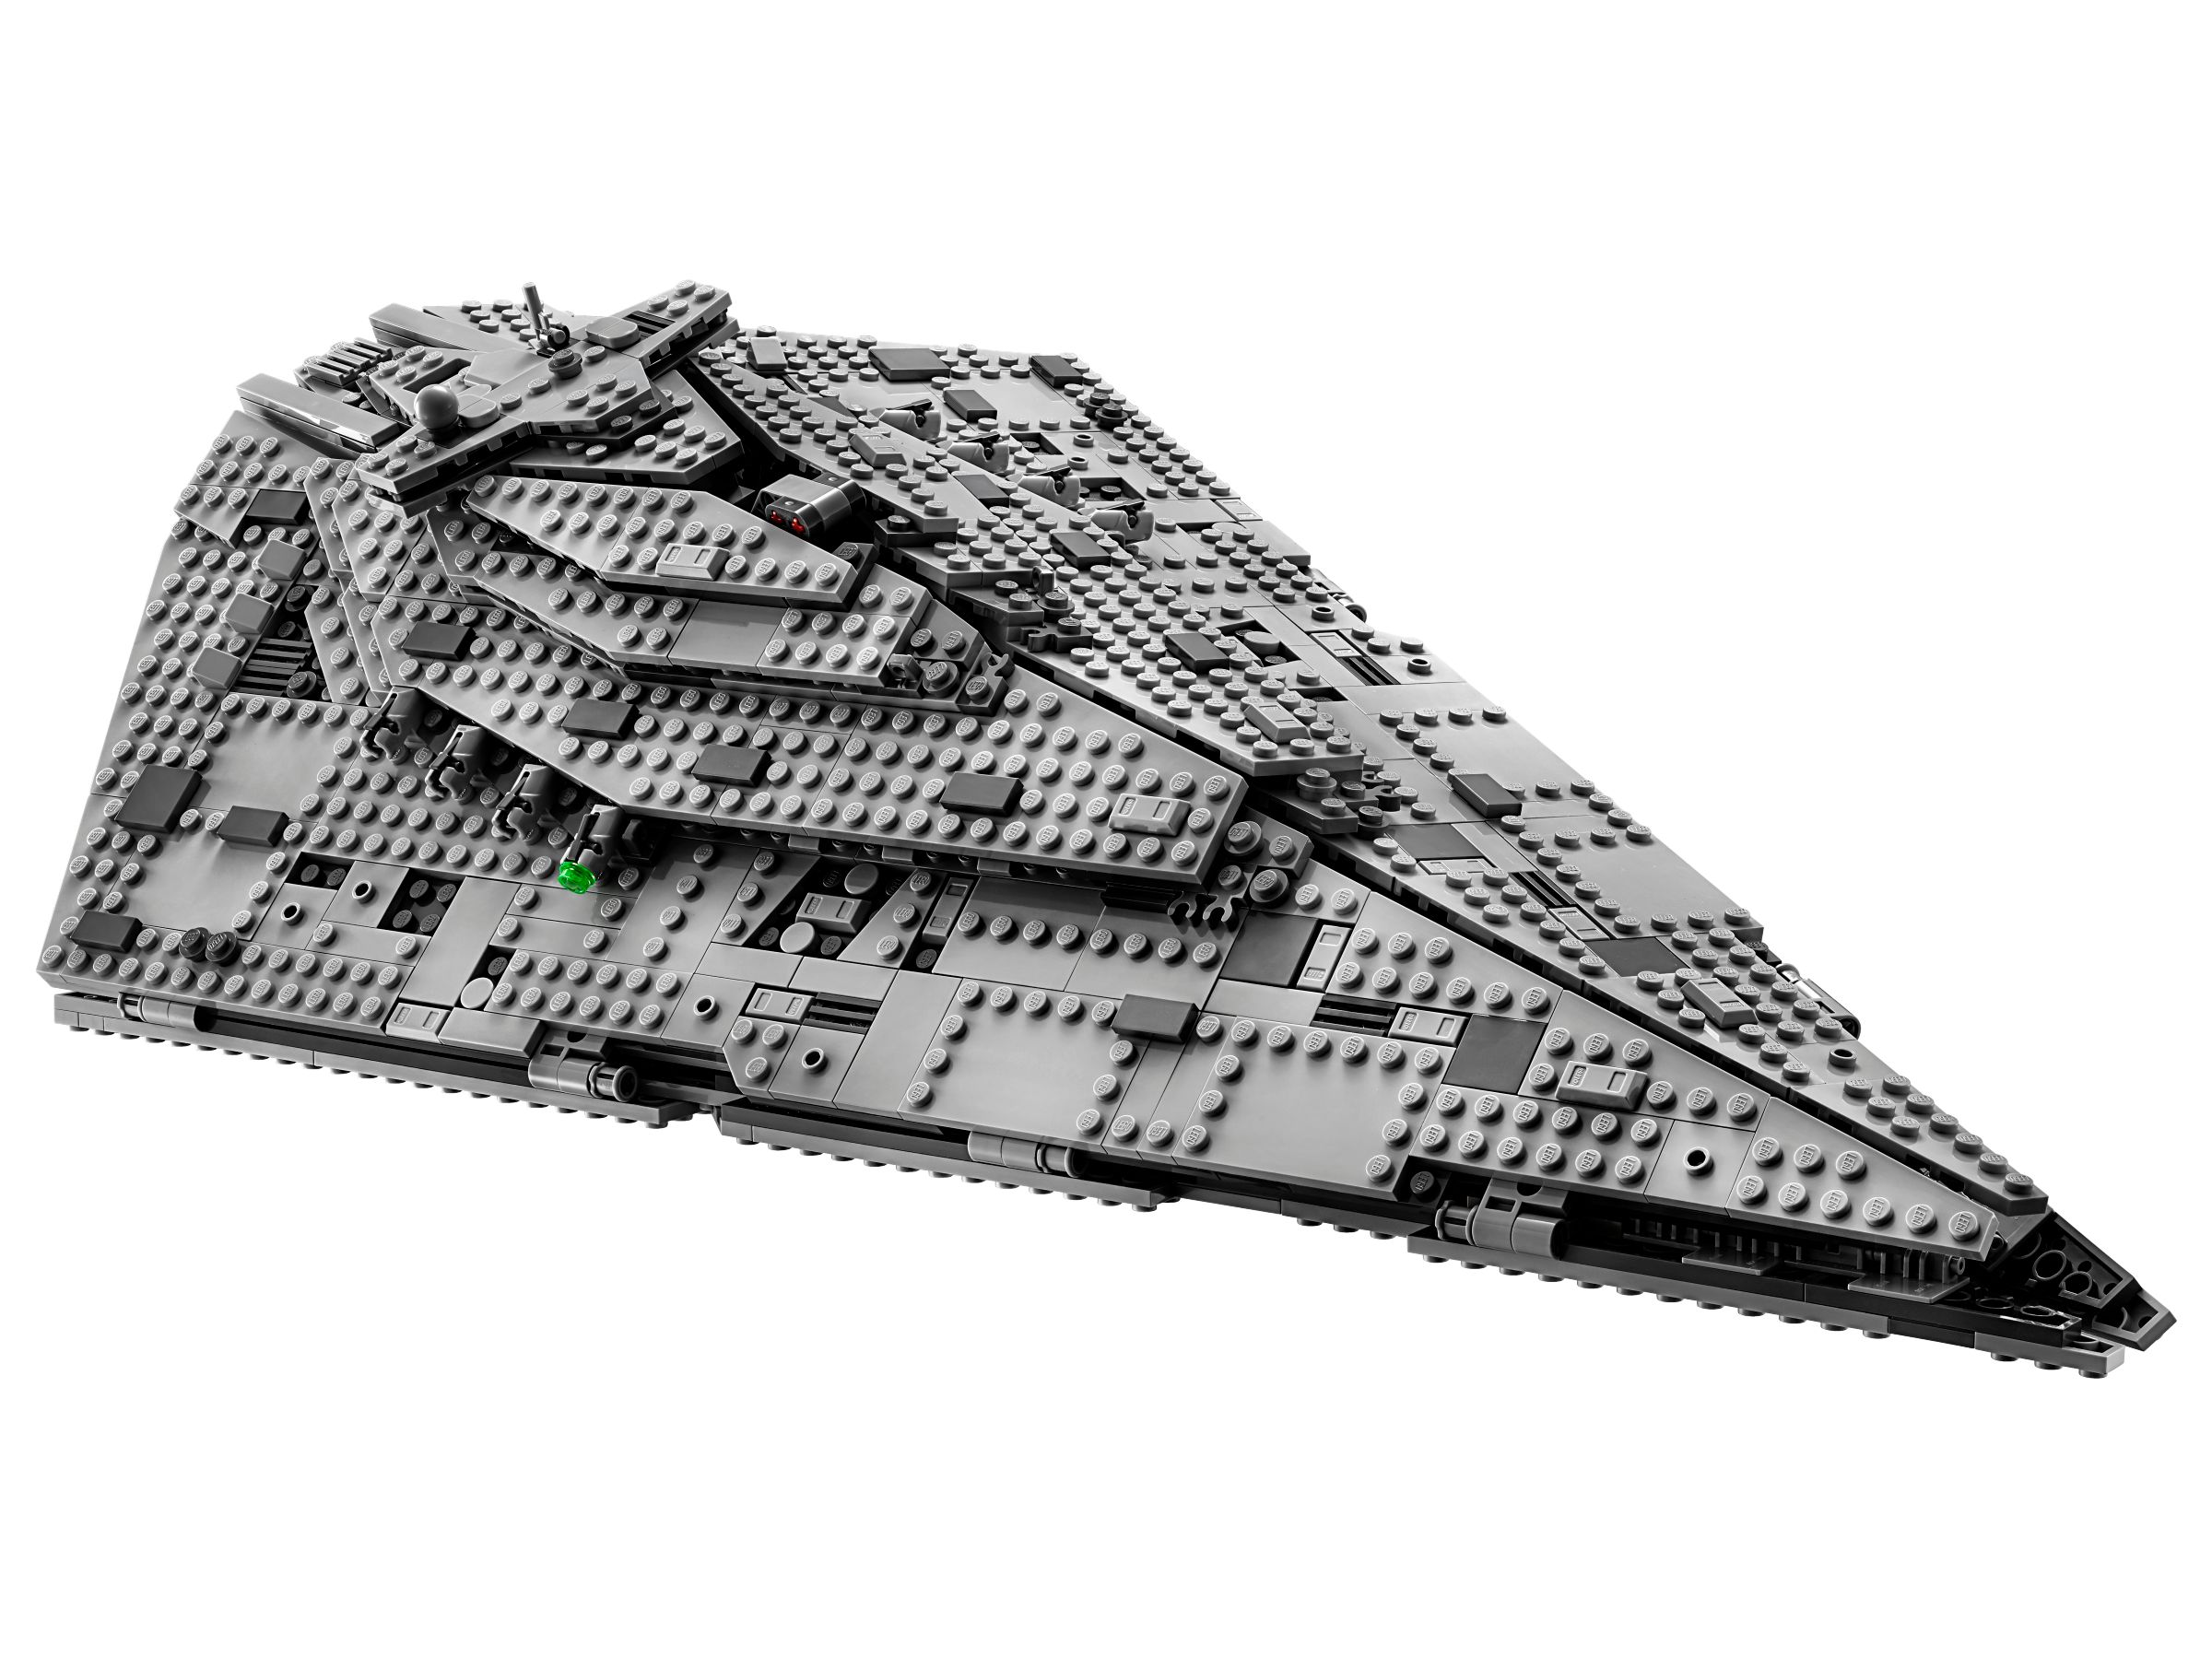 LEGO Star Wars 75190 First Order Star Destroyer™ LEGO_75190_alt2.jpg